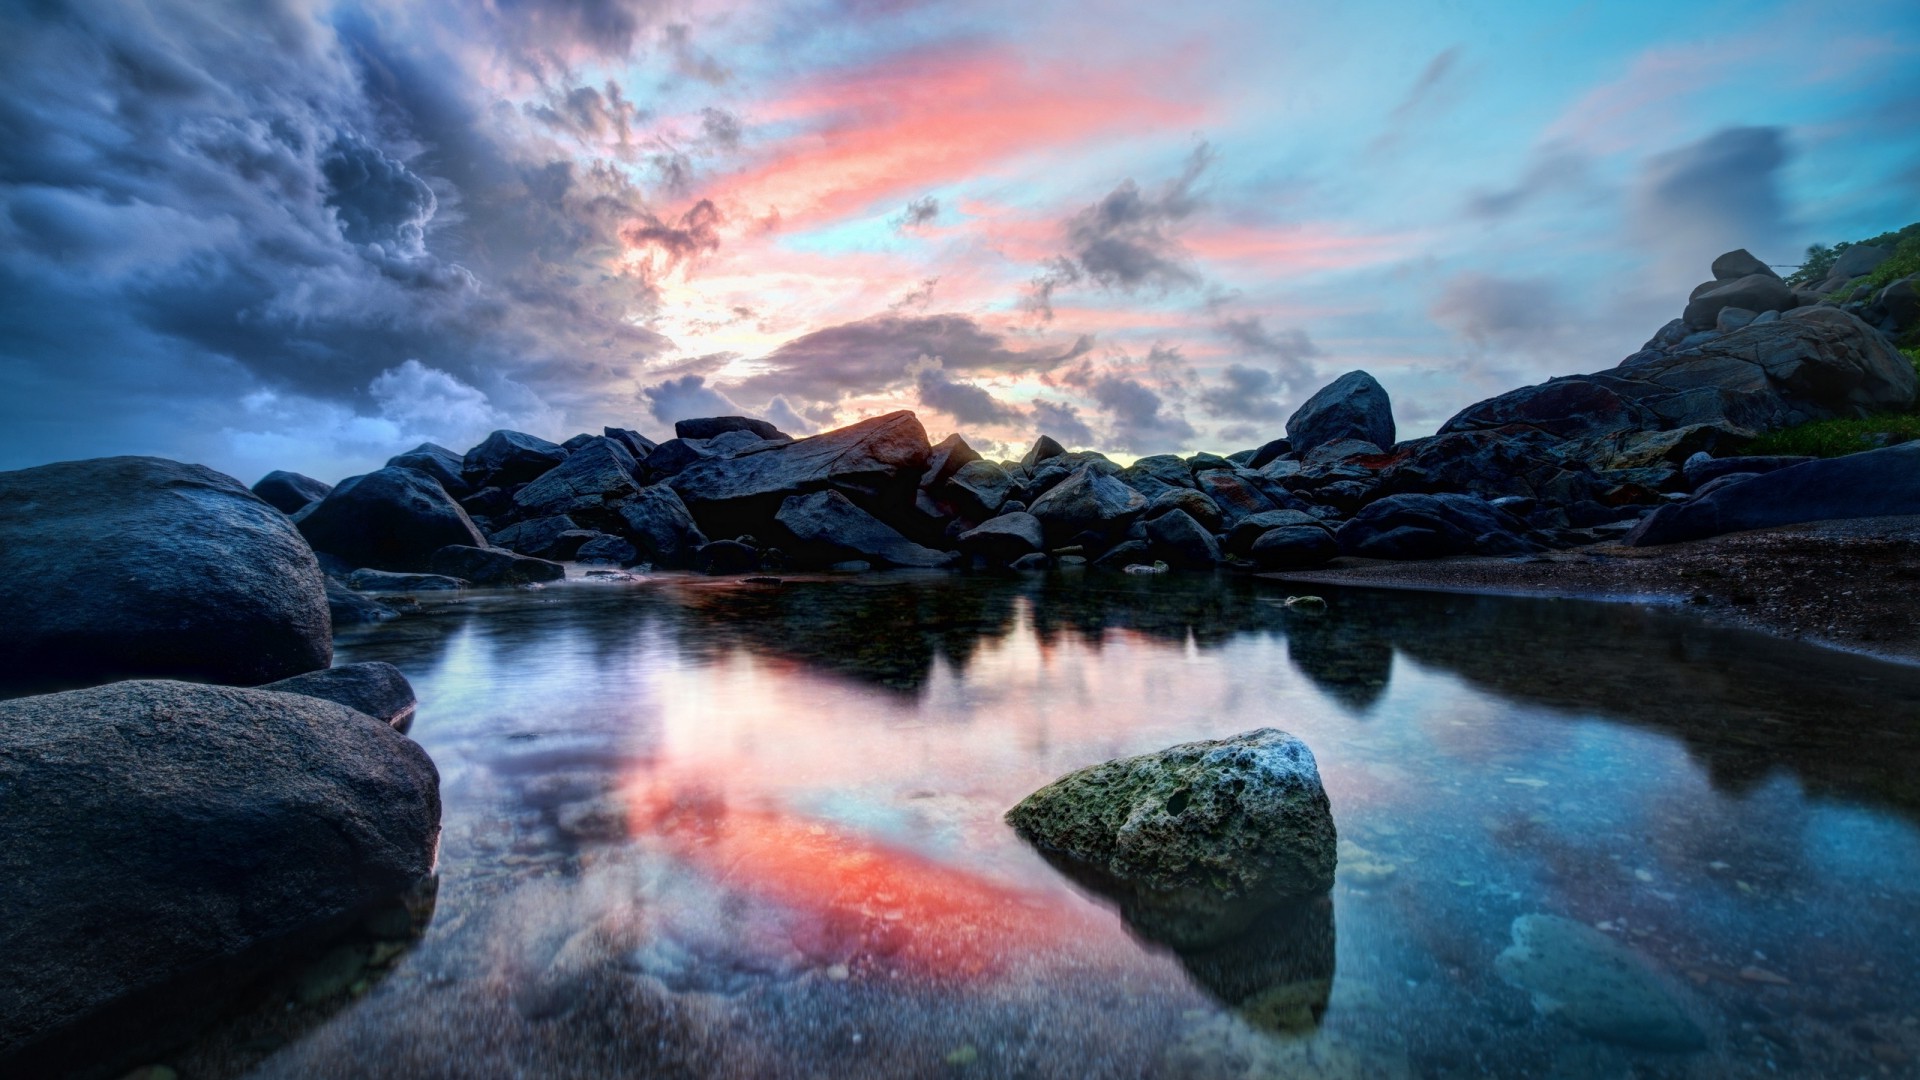 pond, Virgin Islands, Rock, Landscape, Clouds, Sunset, Water, Caribbean